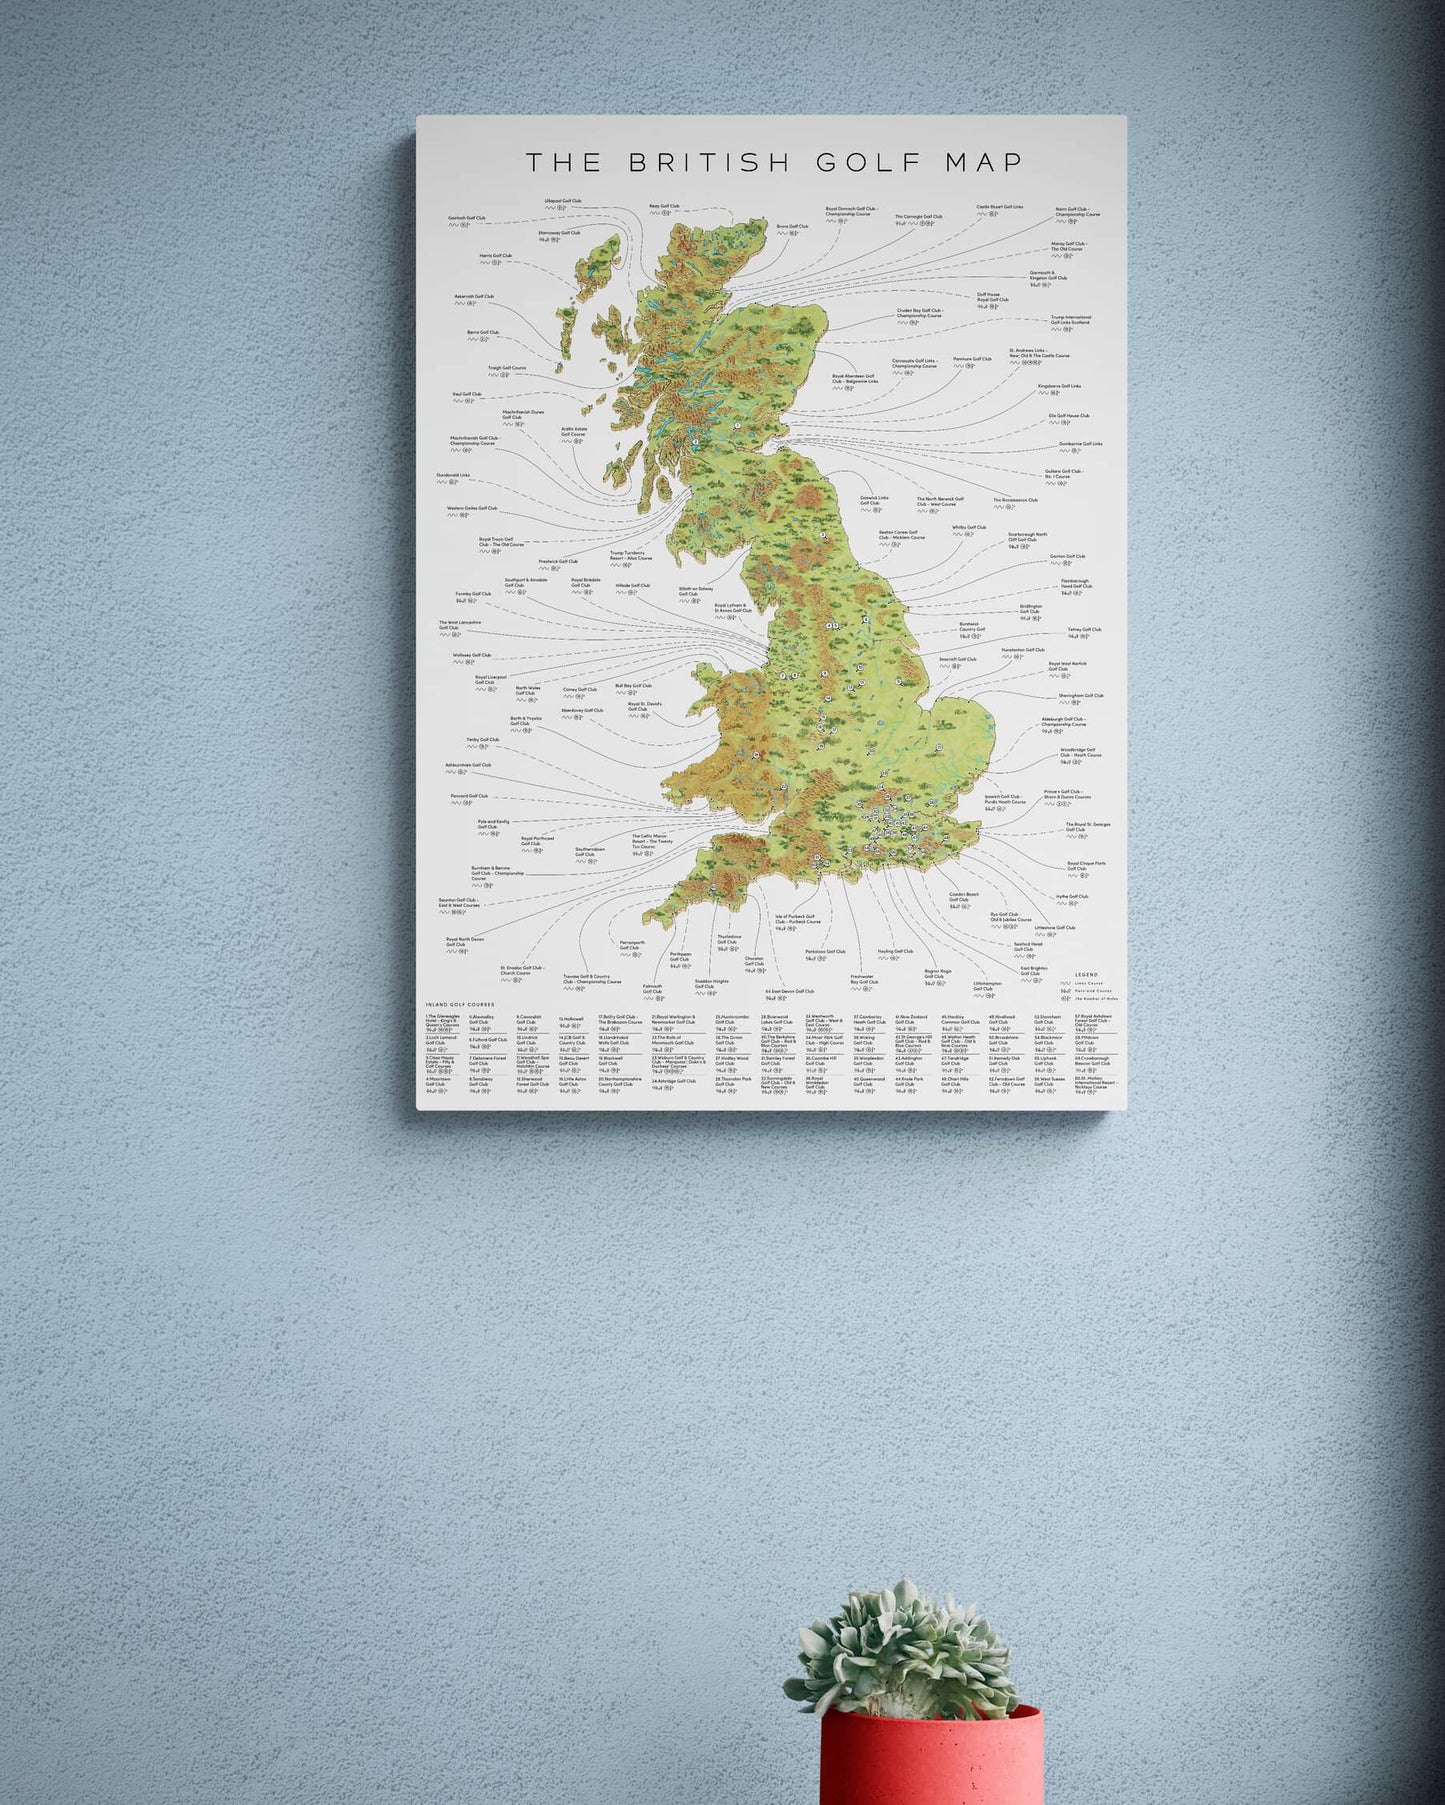 The British Golf Map